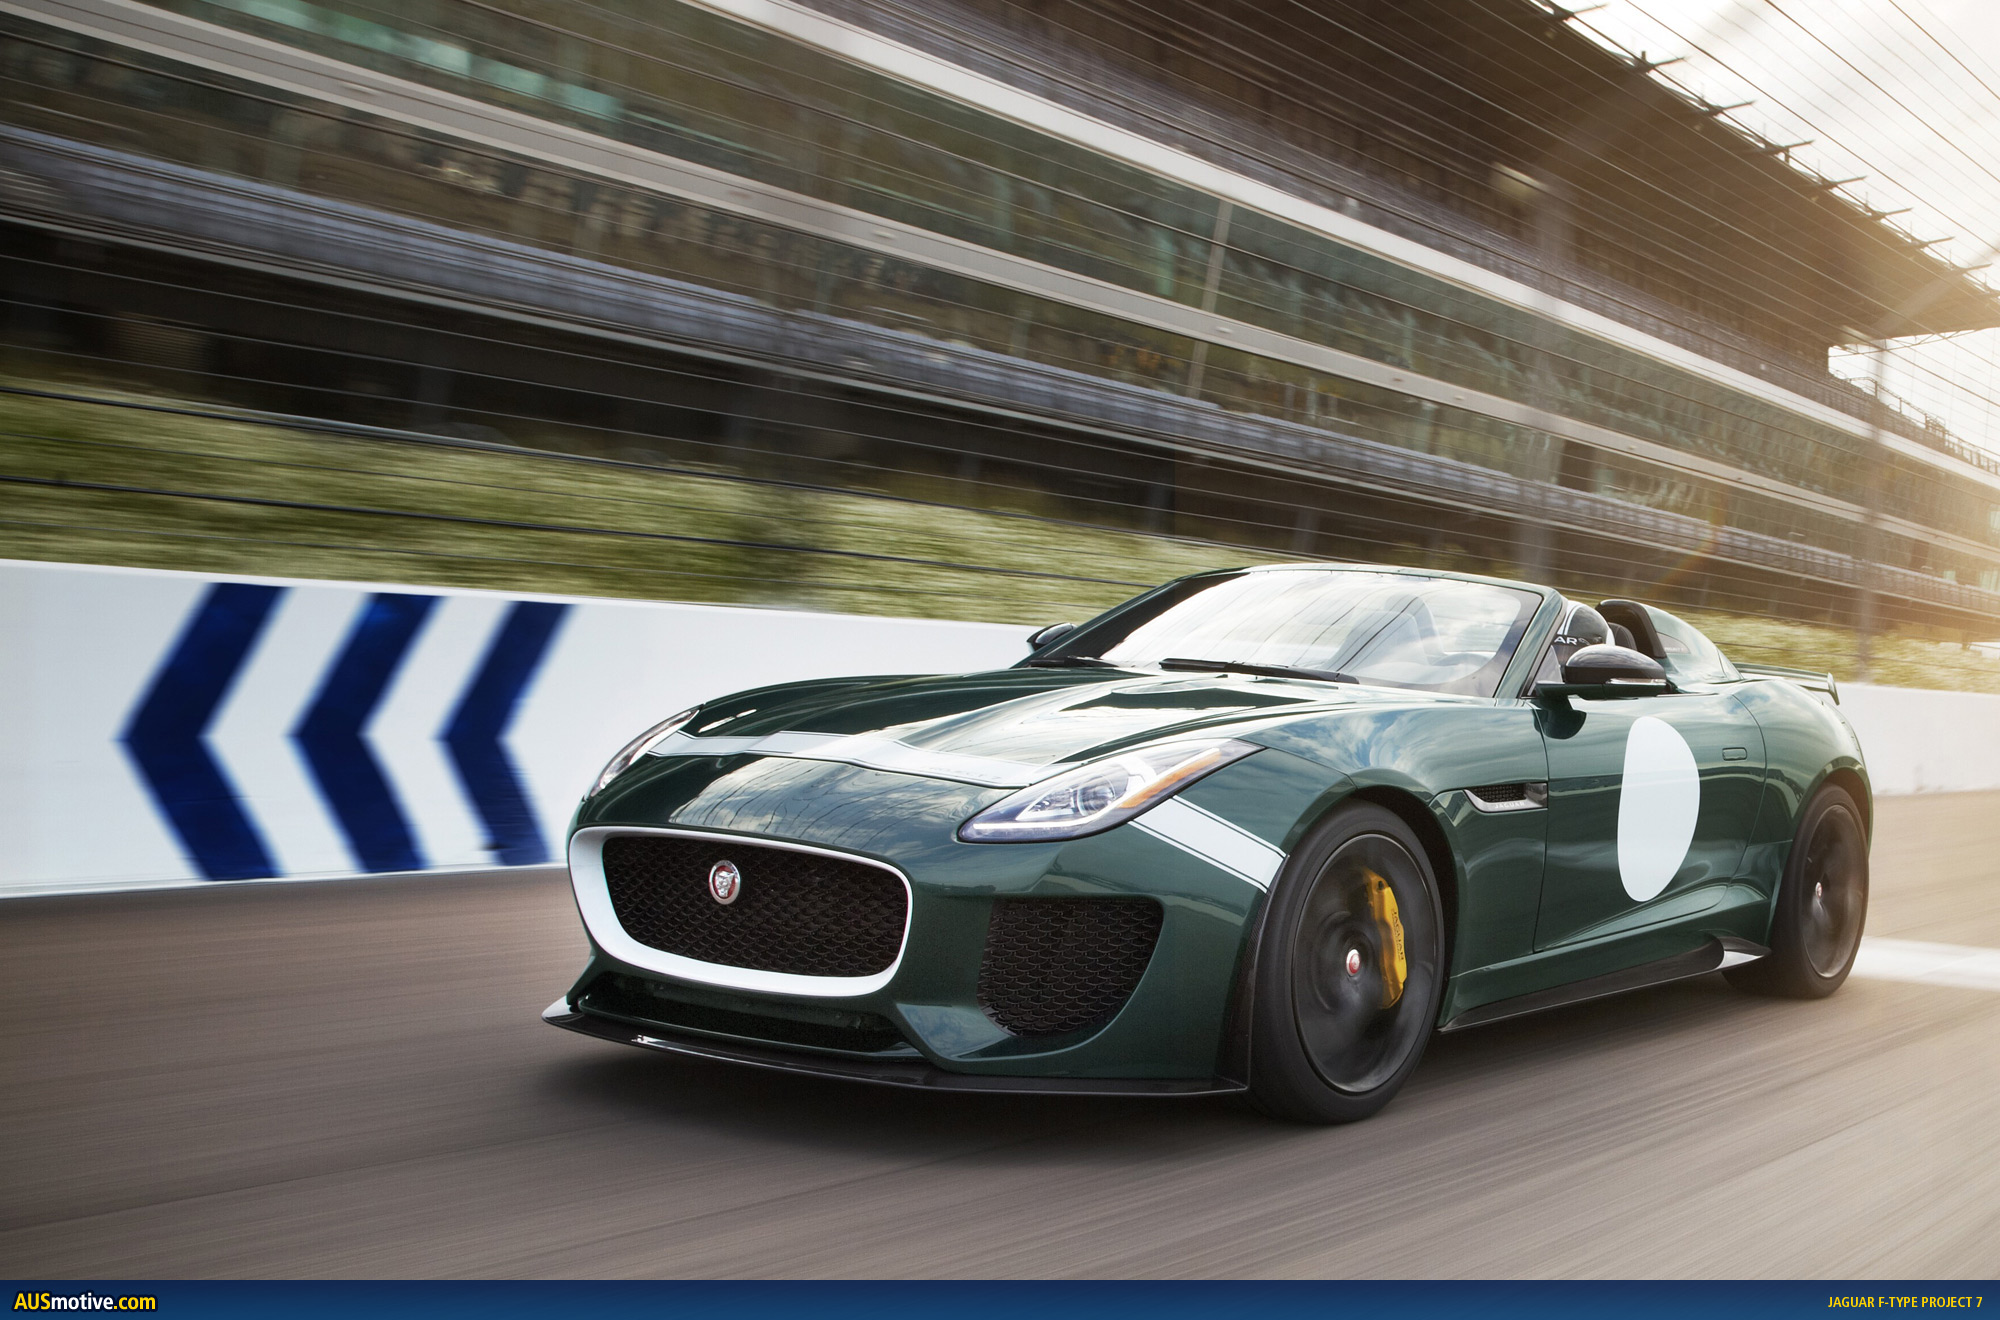 http://www.ausmotive.com/pics/2014/Jaguar-F-Type-Project-7-03.jpg